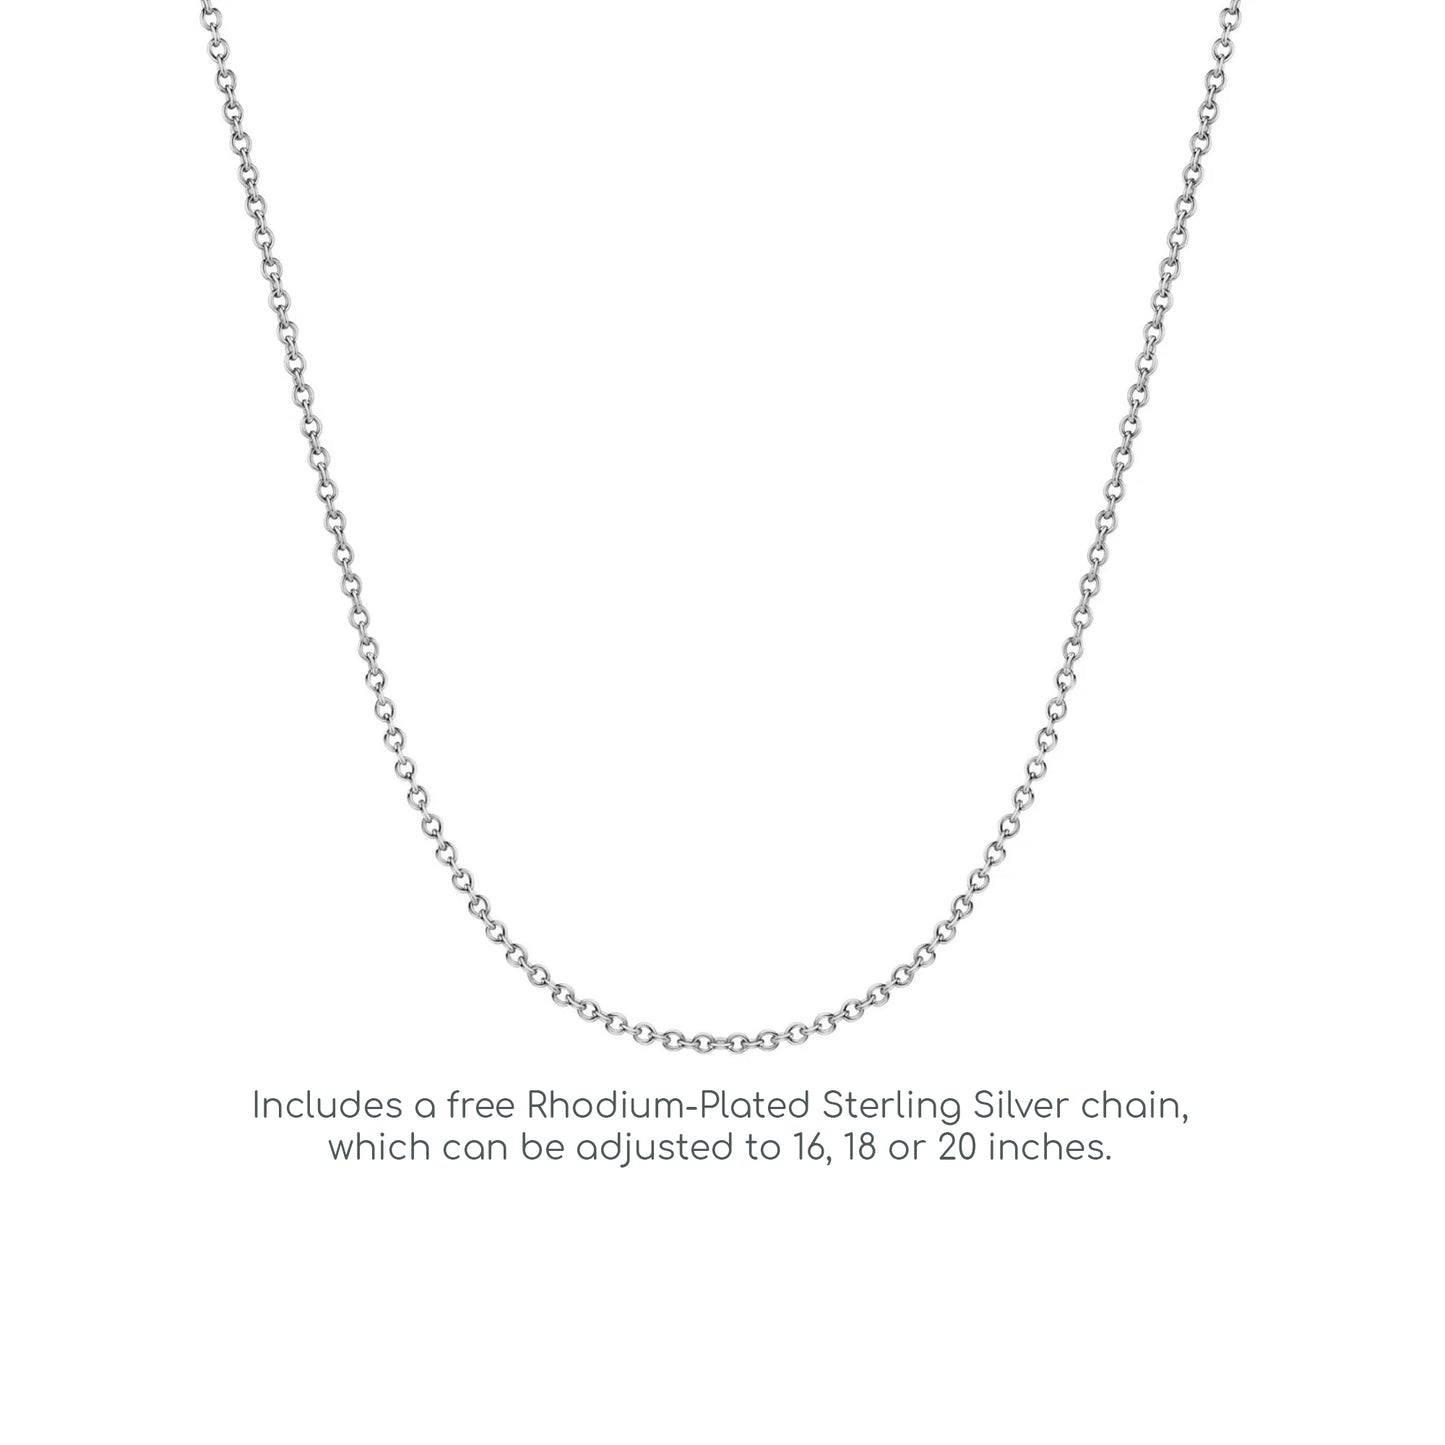 Unisex Silver  Eternity Sash Ribbon Cross Pendant Necklace - GVX061